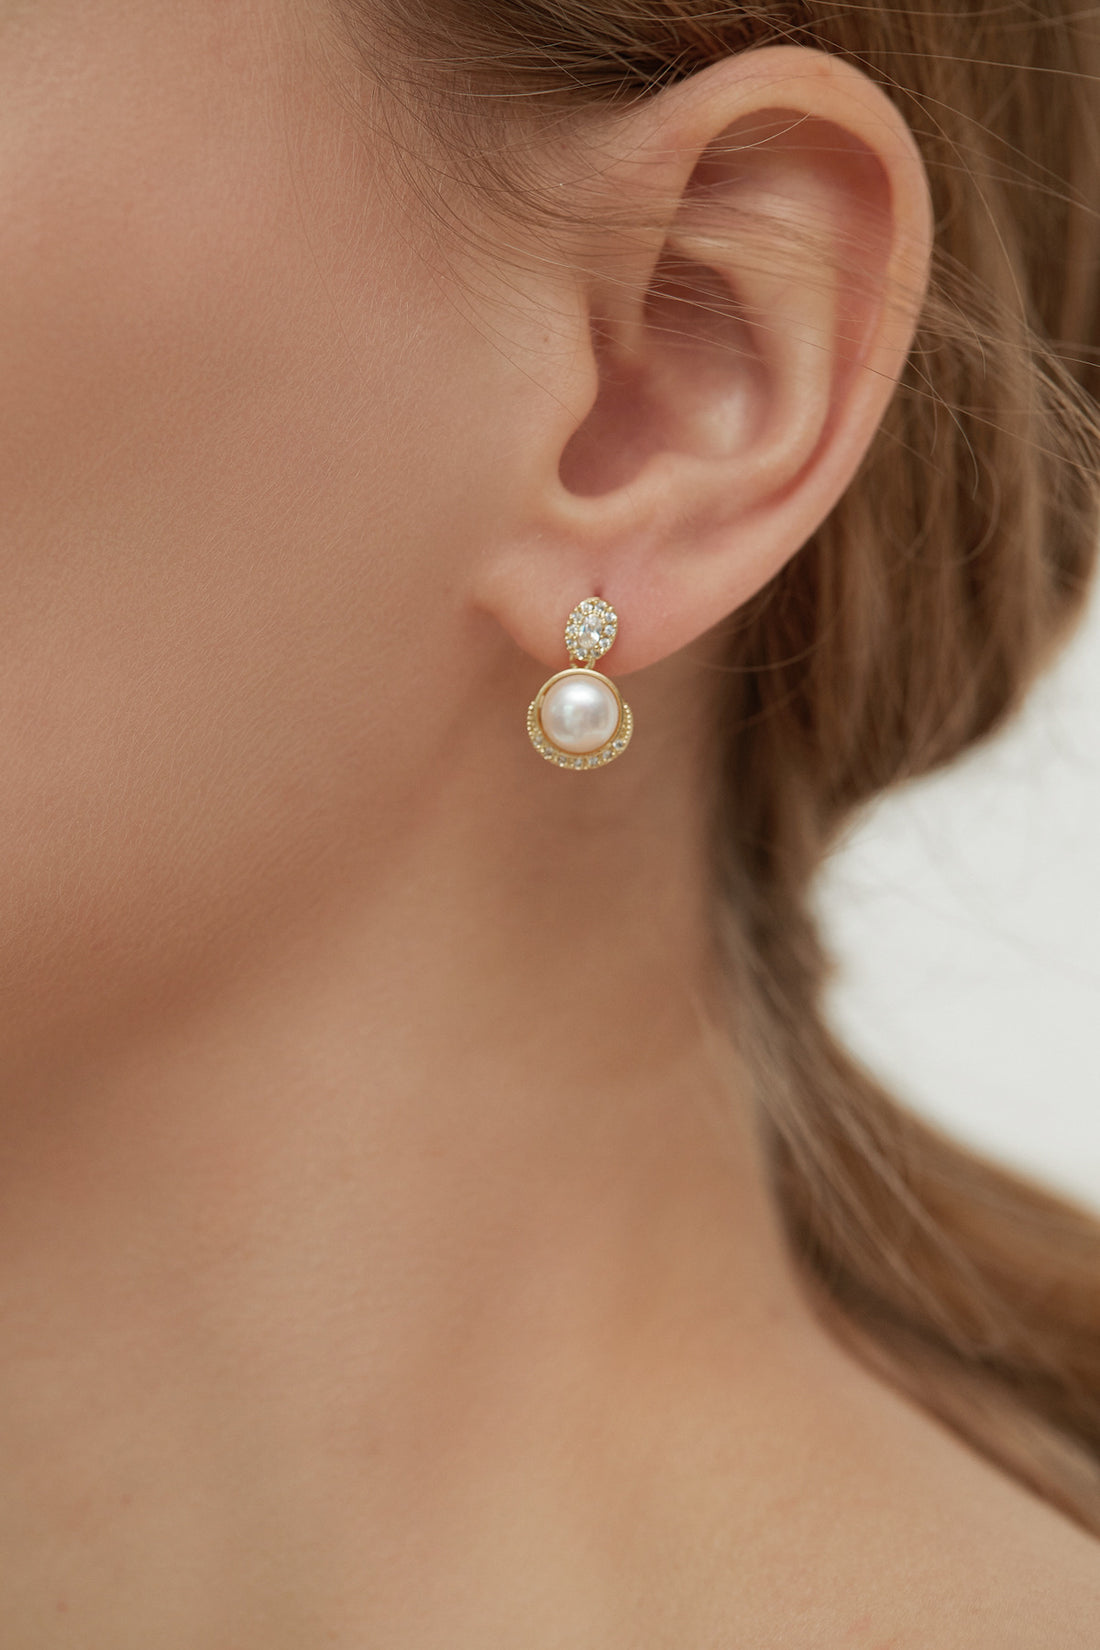 SKYE Shop Chic Modern Elegant Classy Women Jewelry French Parisian Minimalist Ayda Freshwater Pearl Drop Earrings 11